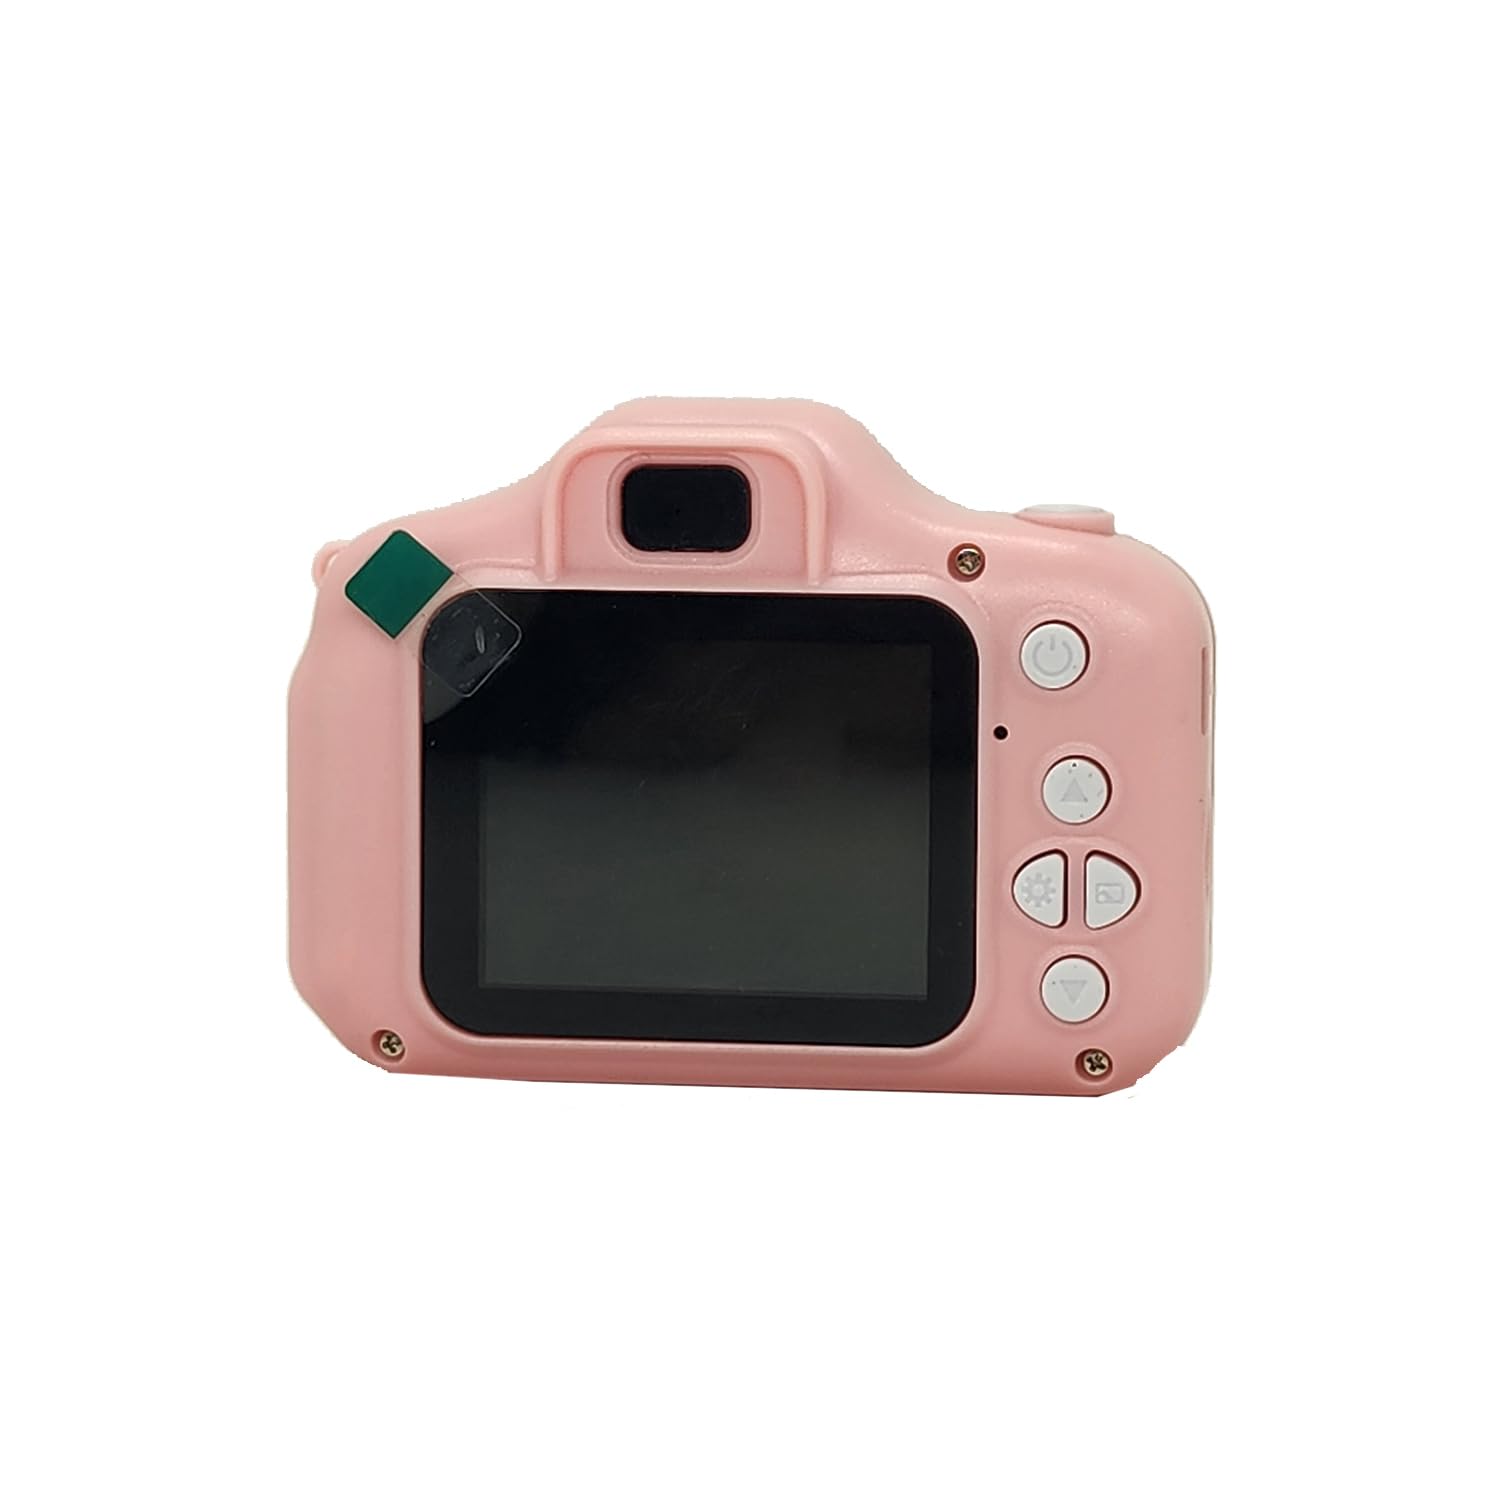 Ultimaxx Essential Kid’s Digital Camera Bundle (Pink) - Includes: 32GB microSD Card, High-Speed Memory Card Reader with Internal microSD Slot, Lanyard, Microfiber Cloth & More (6pc Bundle)